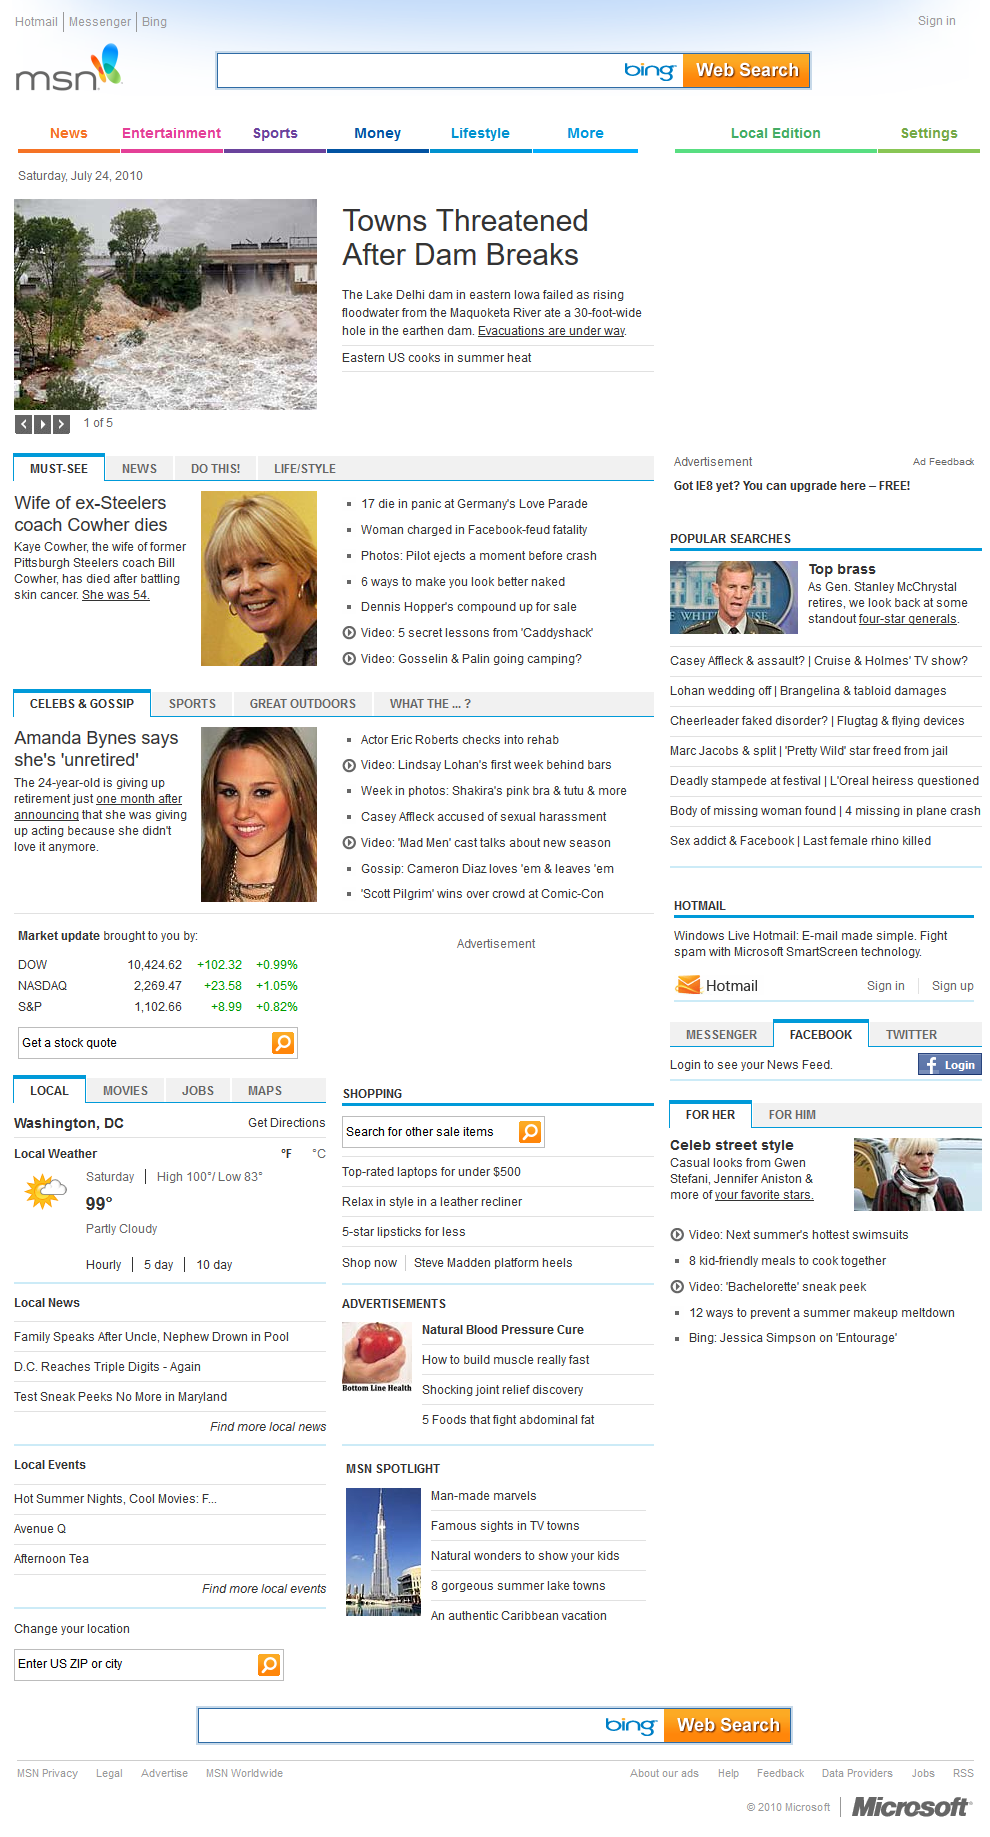 MSN website in 2010